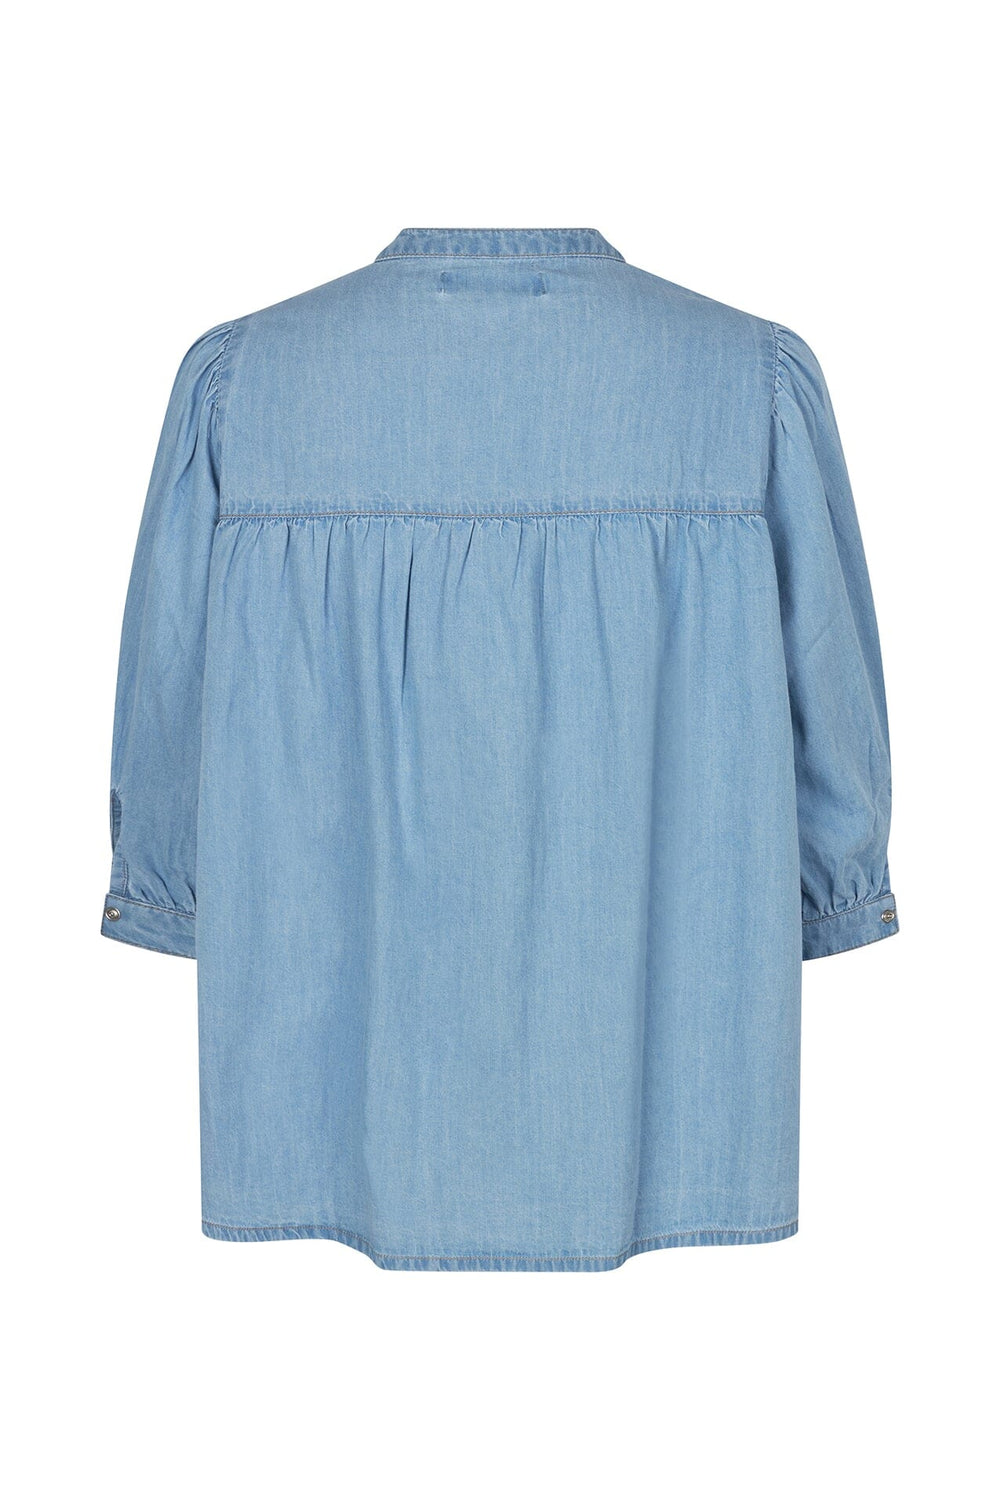 Lollys Laundry - NickyLL Shirt 3/4 24250-1030 - 20 Blue Bluser 